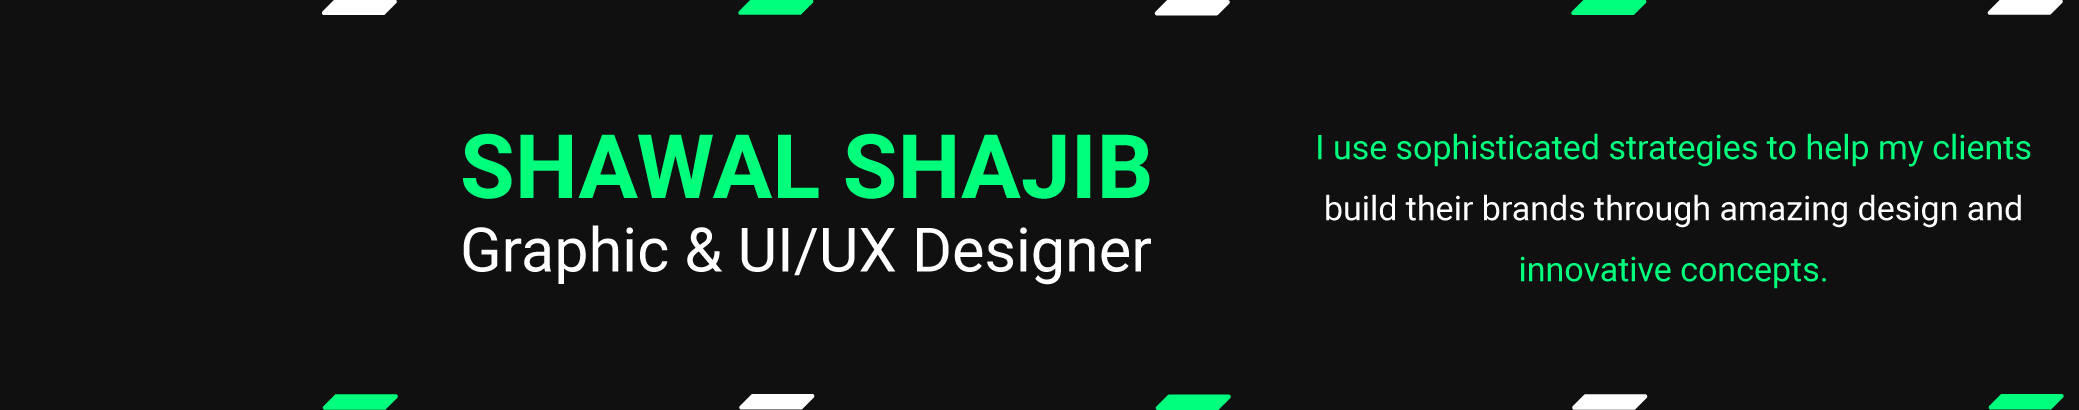 Shawal Shajib ✪'s profile banner